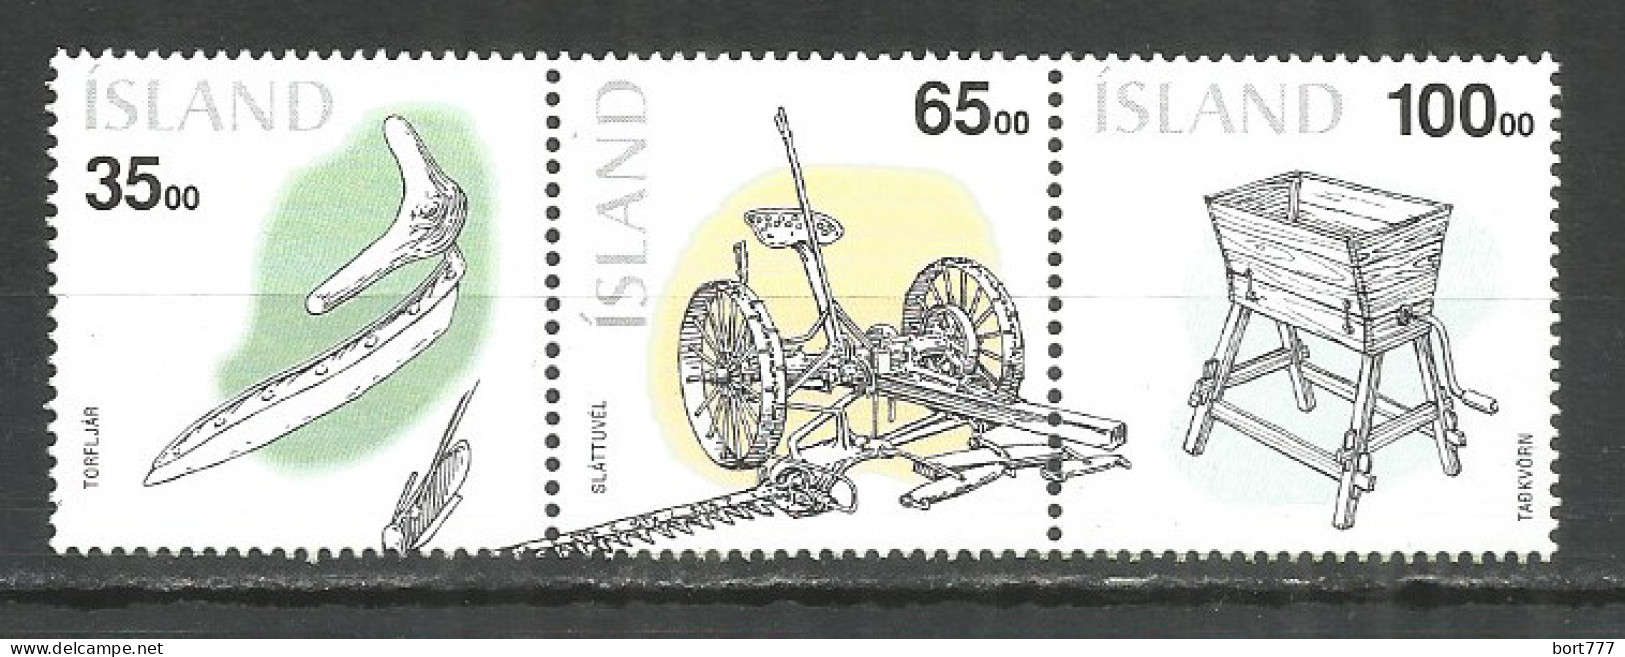 ICELAND 1998 Mint Stamps MNH(**) Set  - Neufs